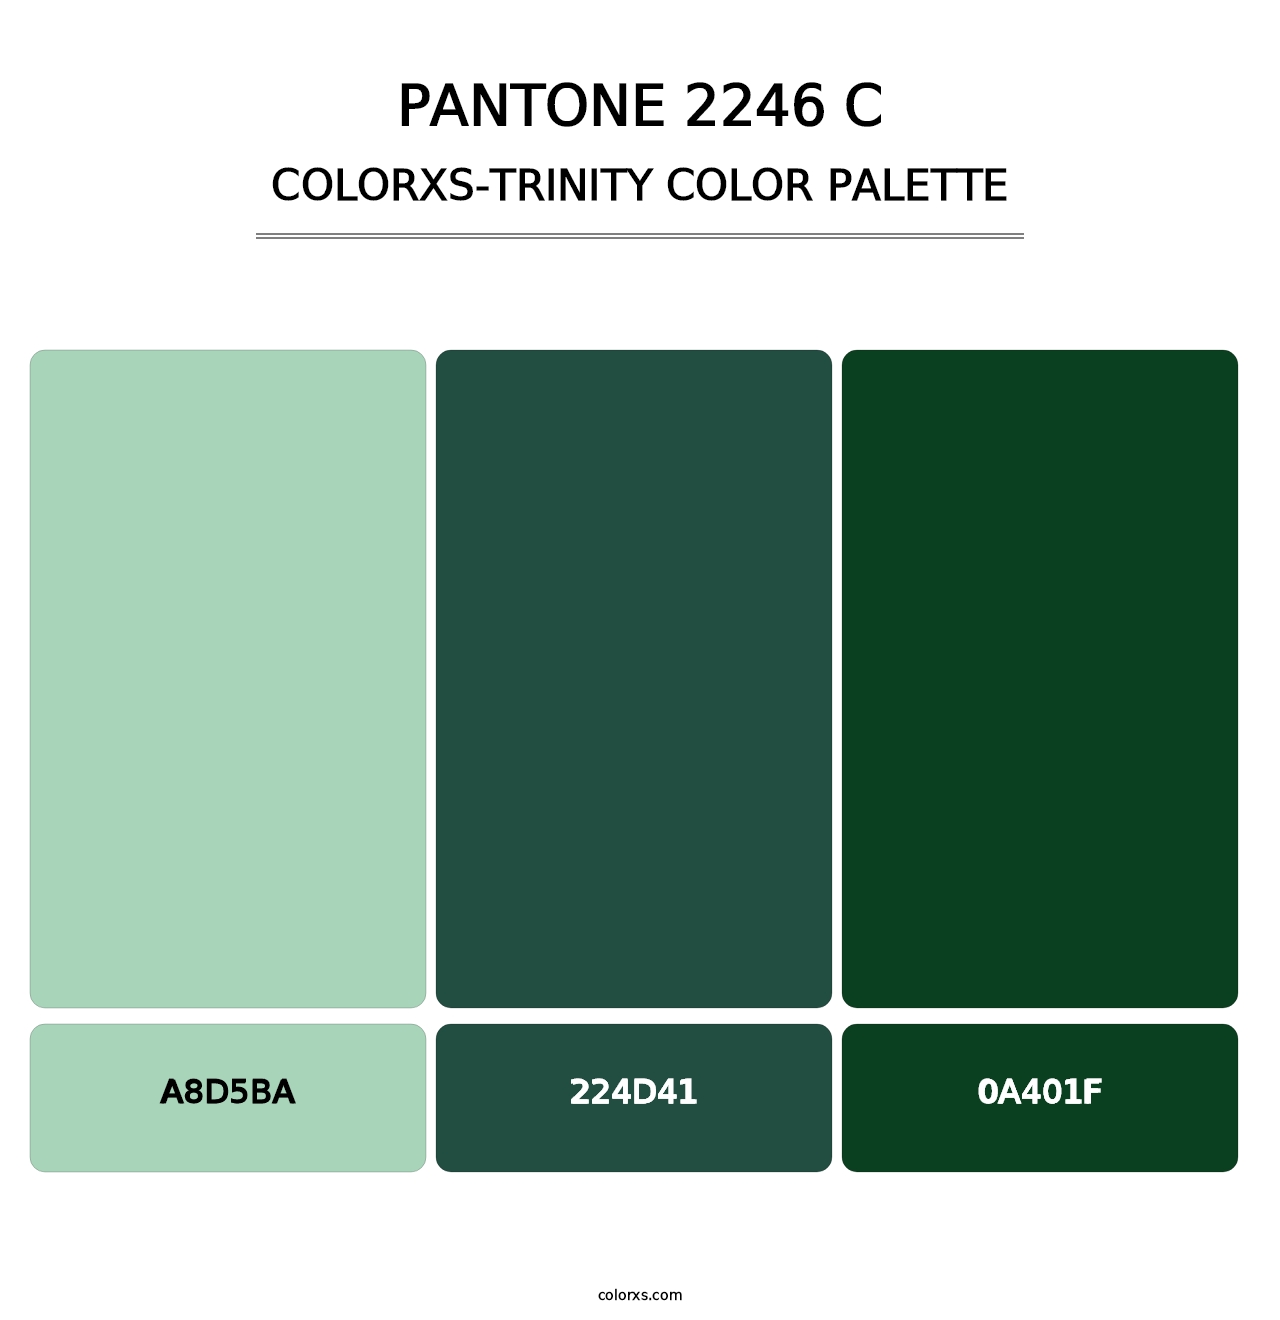 PANTONE 2246 C - Colorxs Trinity Palette